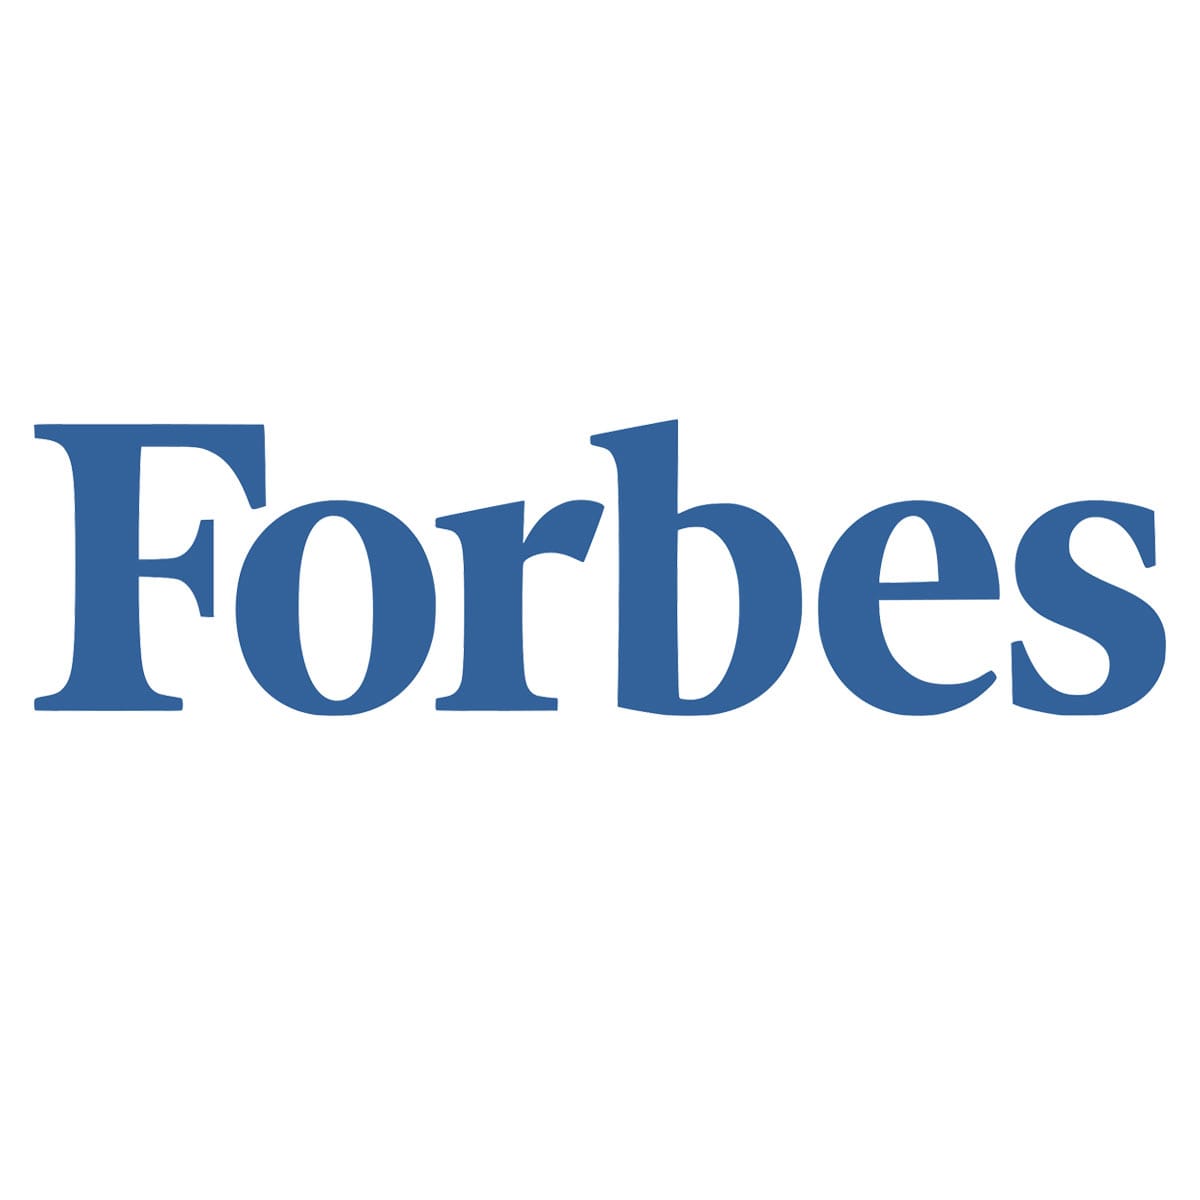 Forbes Magazine Online